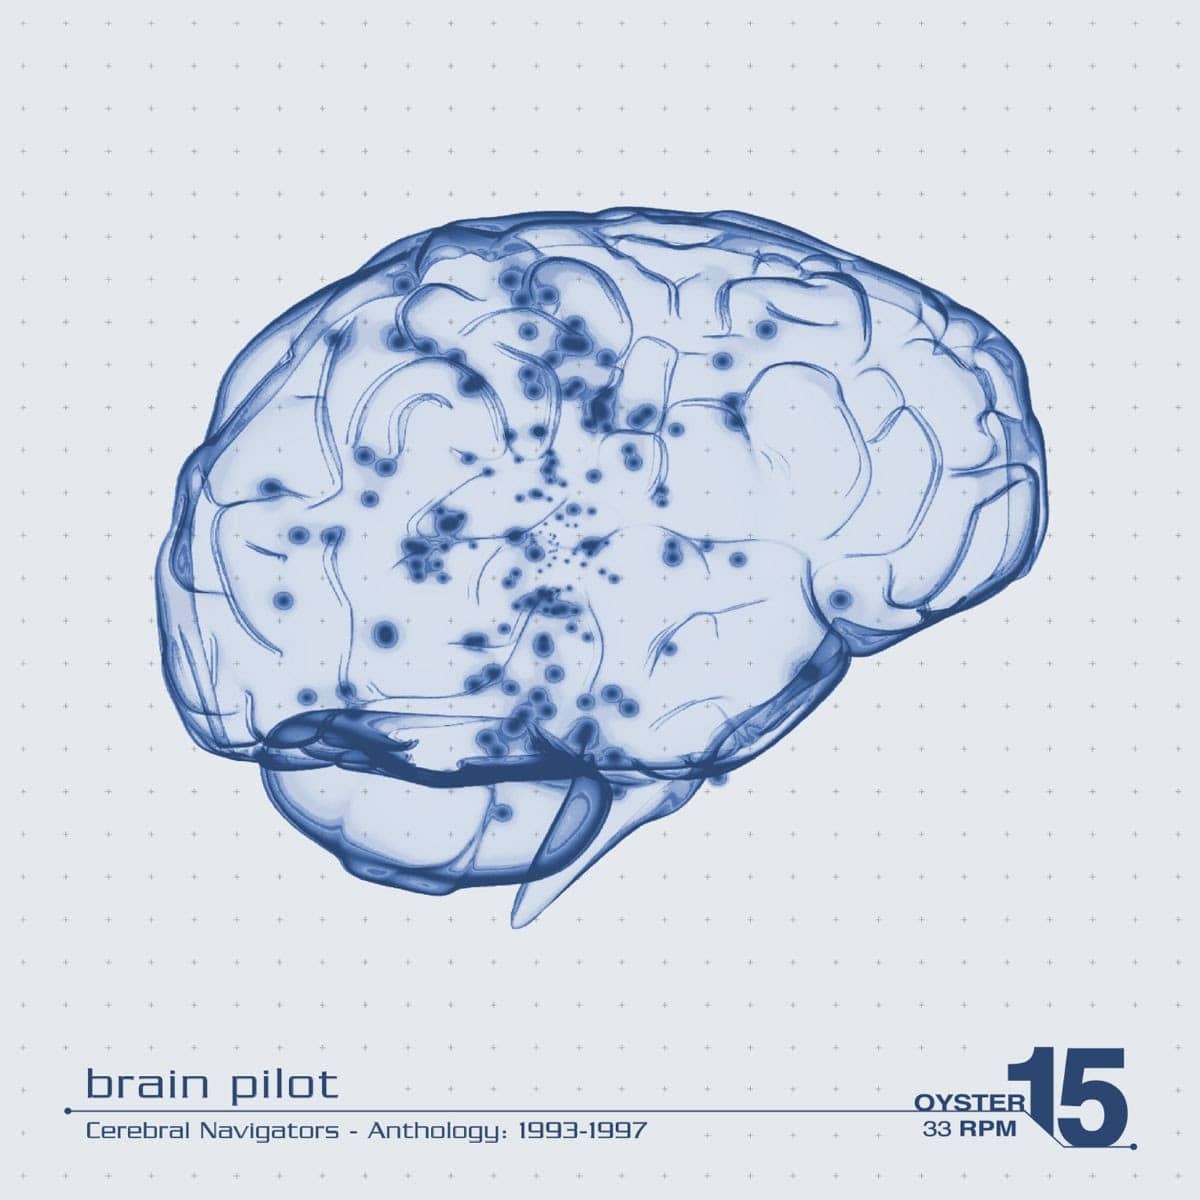 Brain Pilot - Cerebral Navigators: Anthology 1993-1997 2lp - OYSTER15 - KALAHARI OYSTER CULT